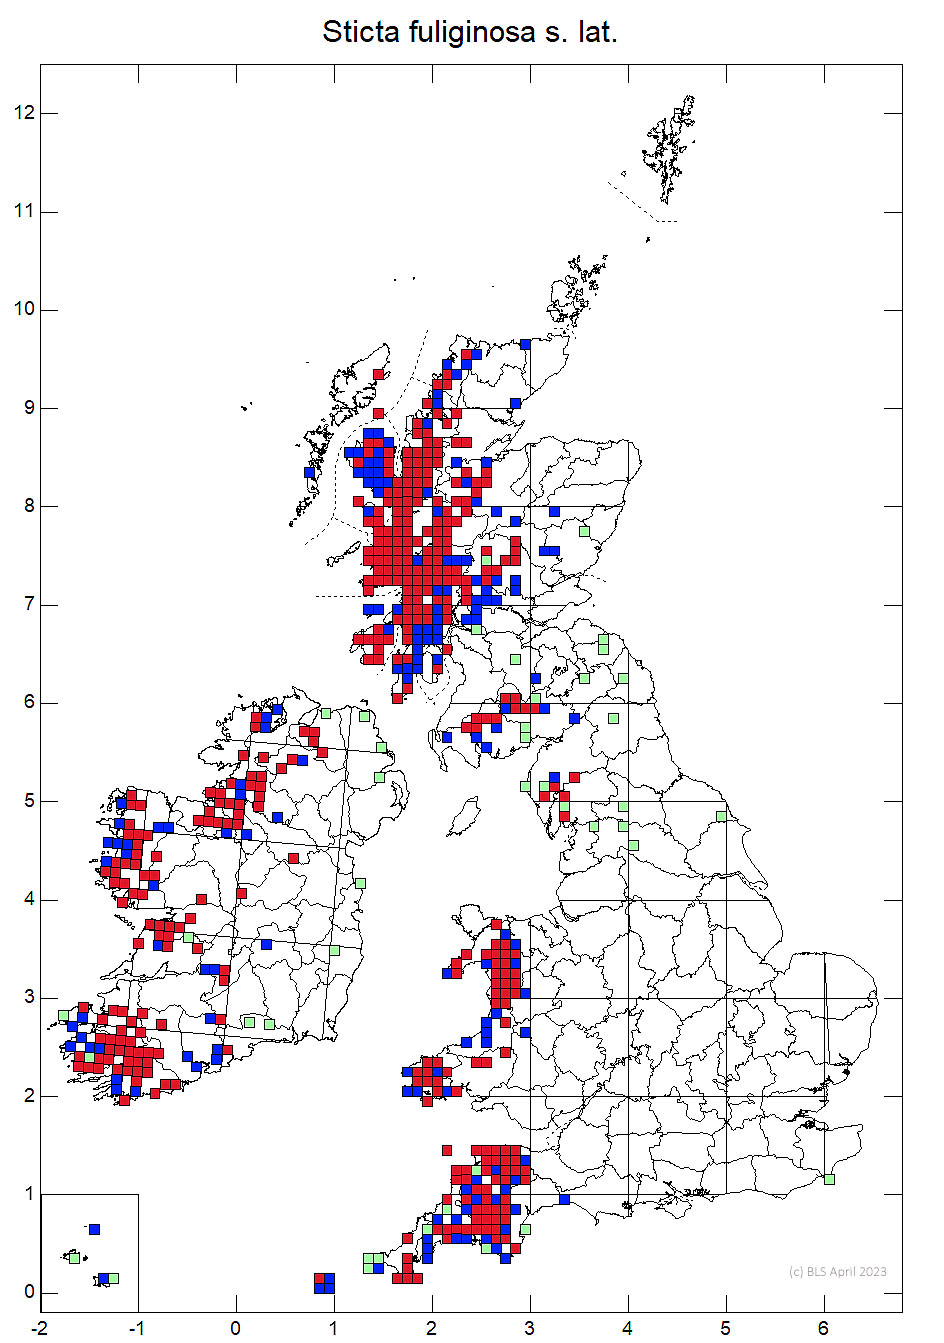 Sticta fuliginosa s. lat. 10km sq distribution map